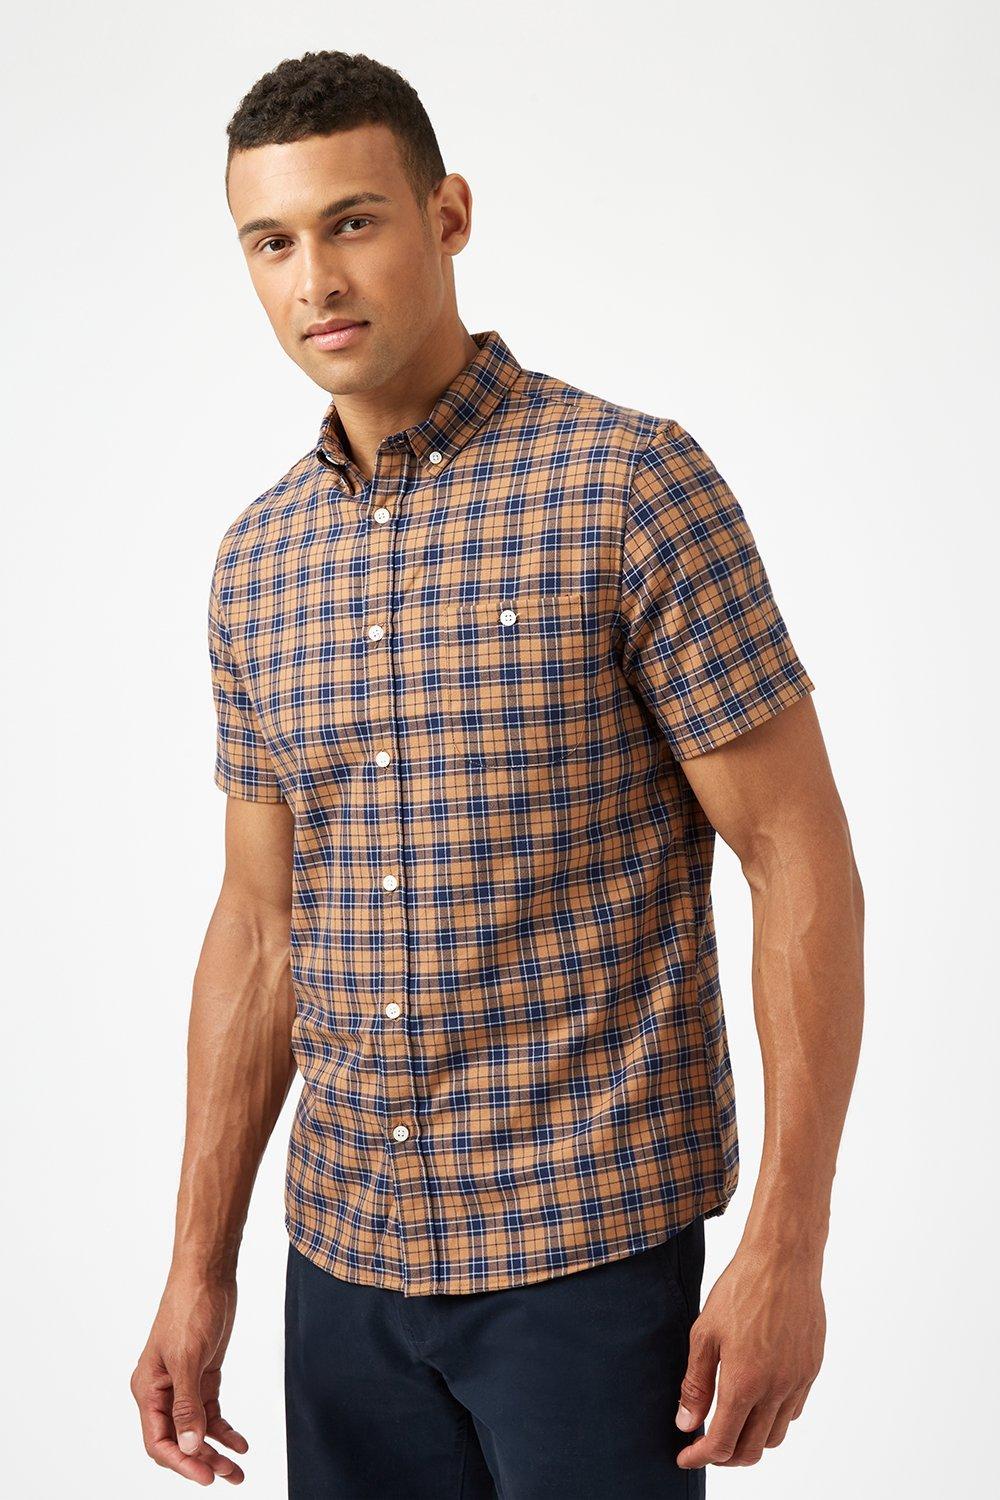 Shirts | Tan and Navy Check Shirt | Burton